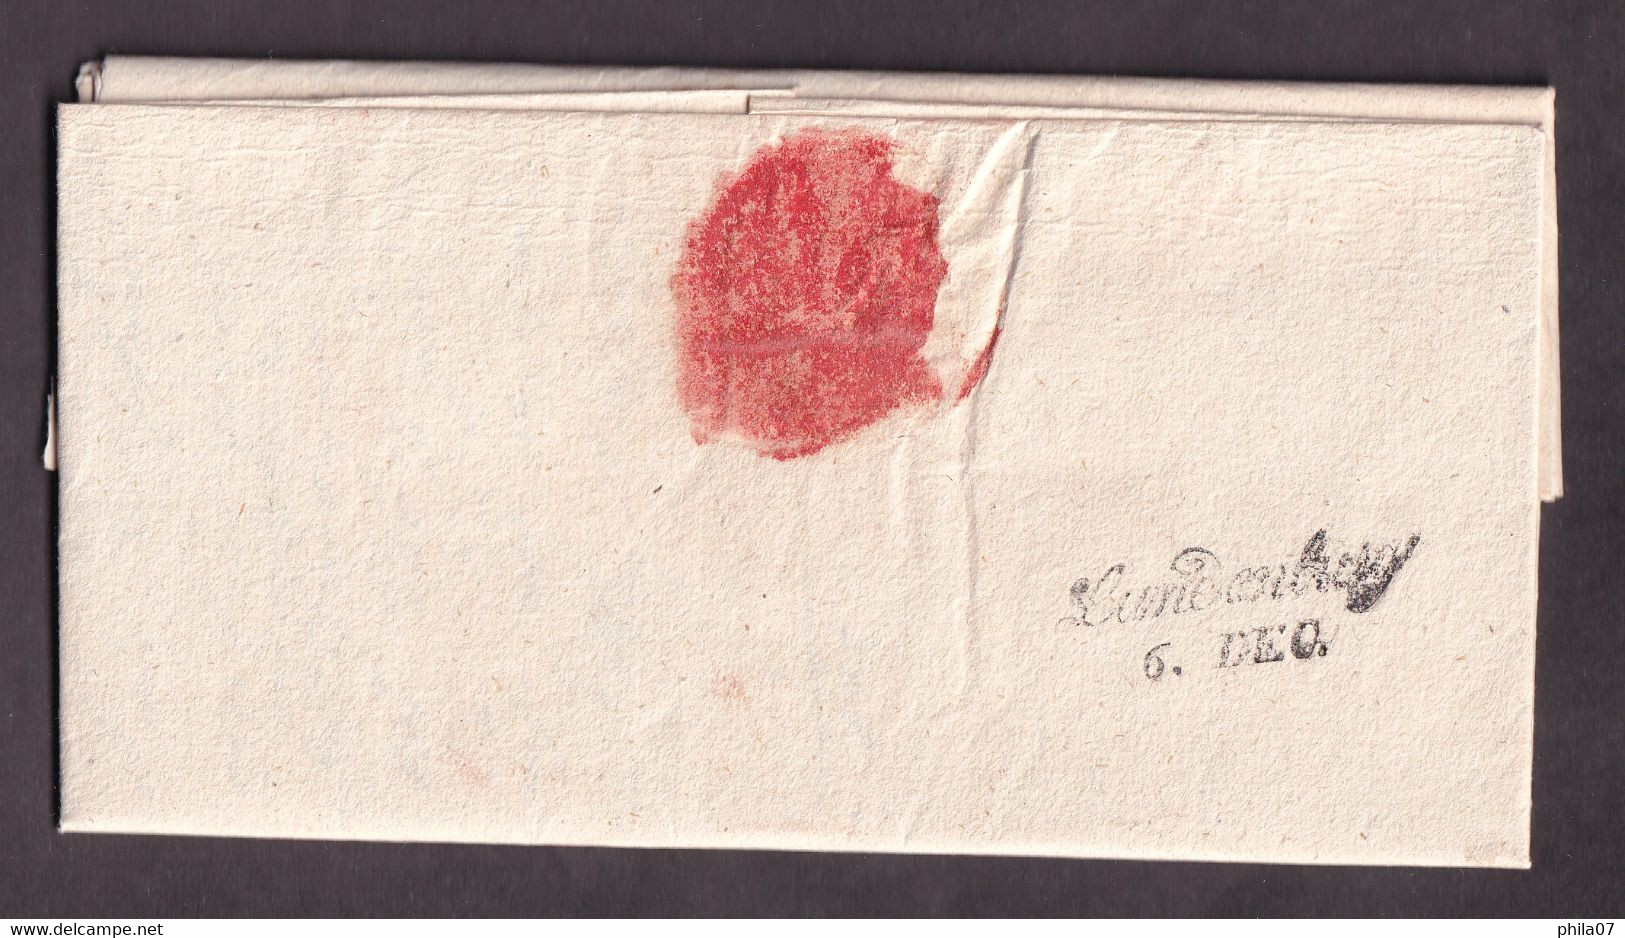 PRE-PHILATELY Croatia/Austria - Letter With Complete Content Sent To LUDENBURG (Breclav) From AGRAM (Zagreb) 23.11. 1841 - ...-1850 Préphilatélie